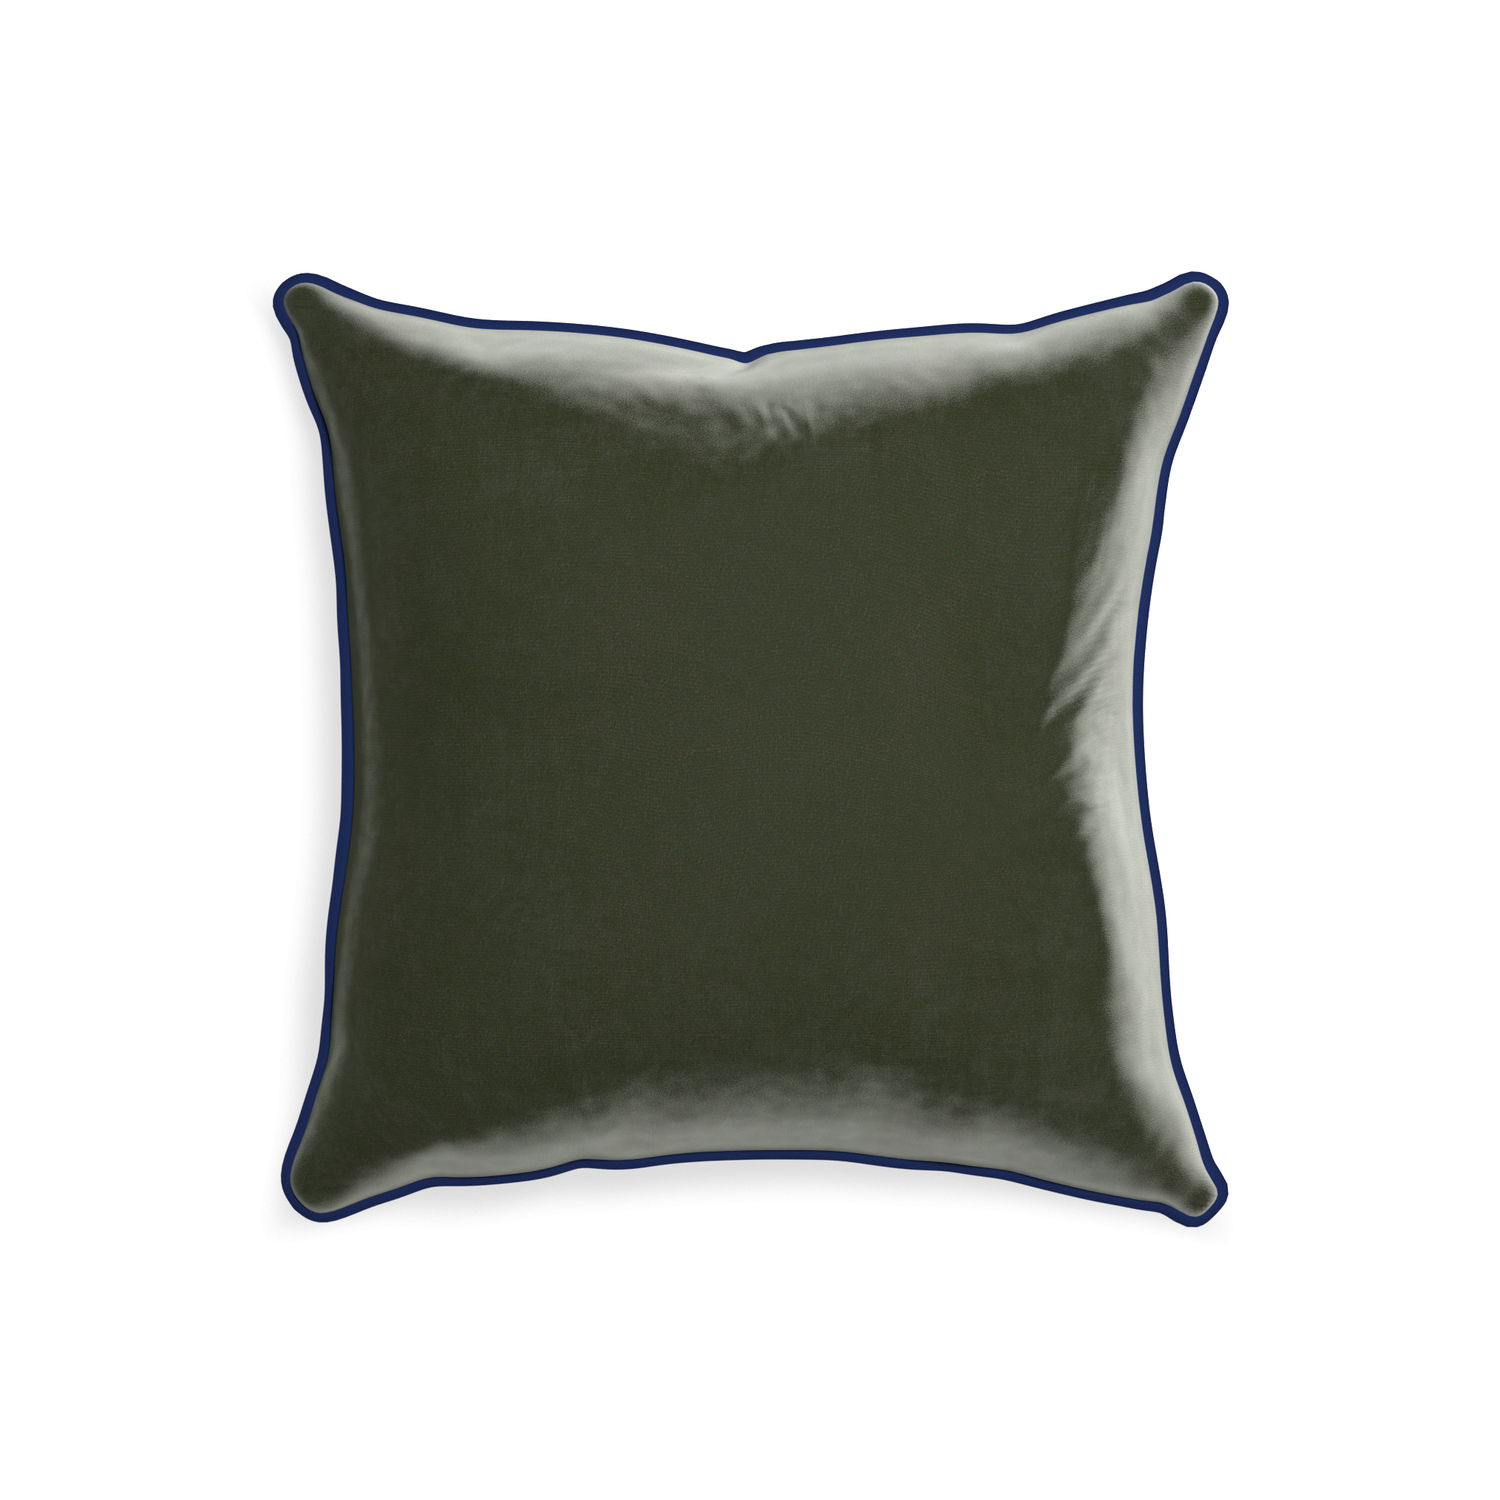 20-square fern velvet custom pillow with midnight piping on white background